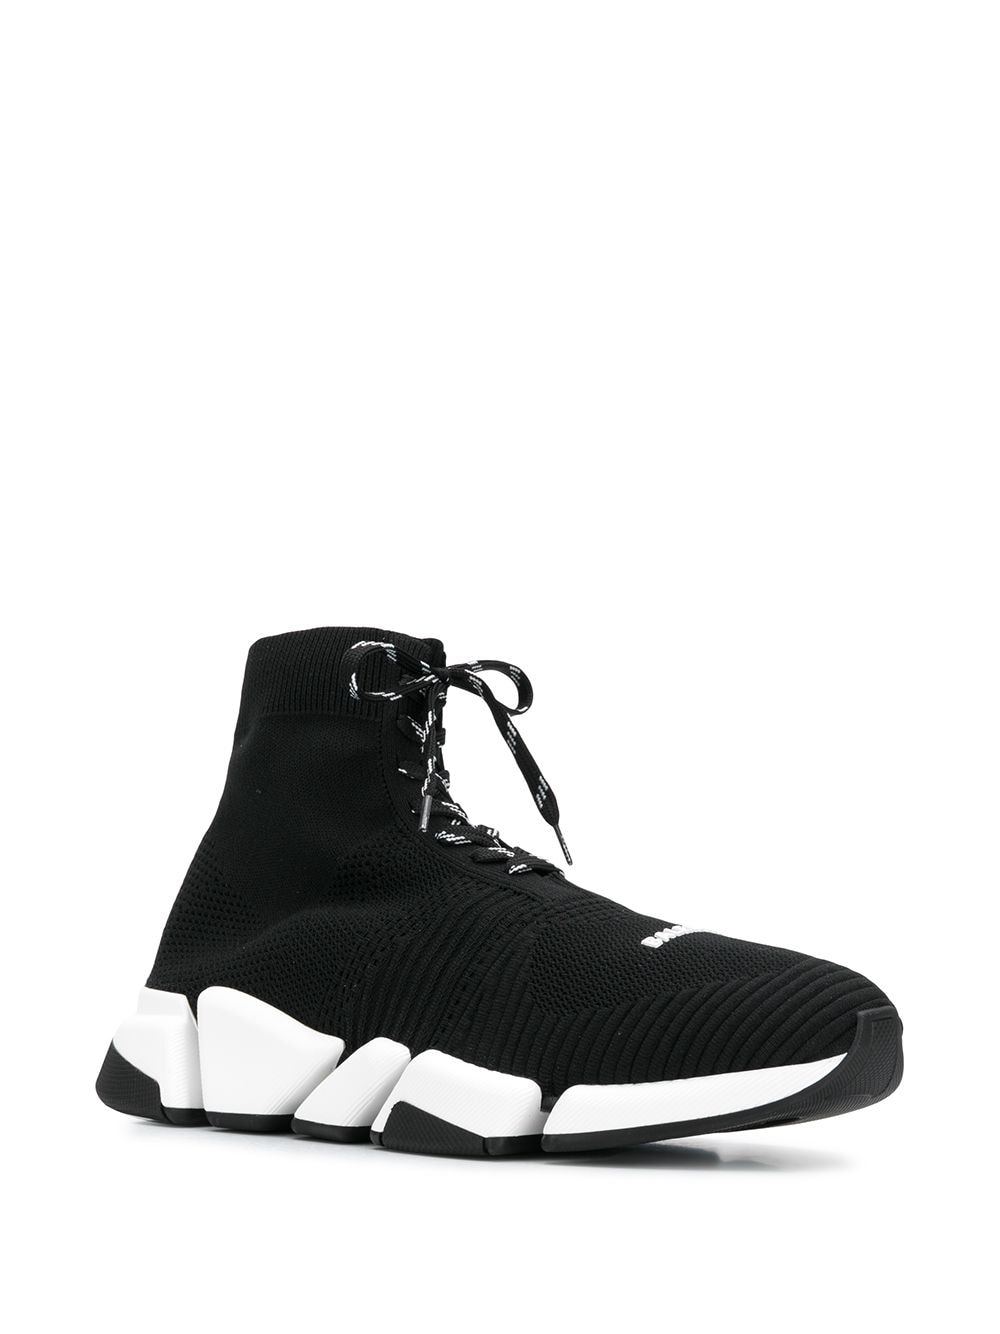 BALENCIAGA Speed 2.0 Lace-Up Sneaker Black/White - Maison De Fashion 